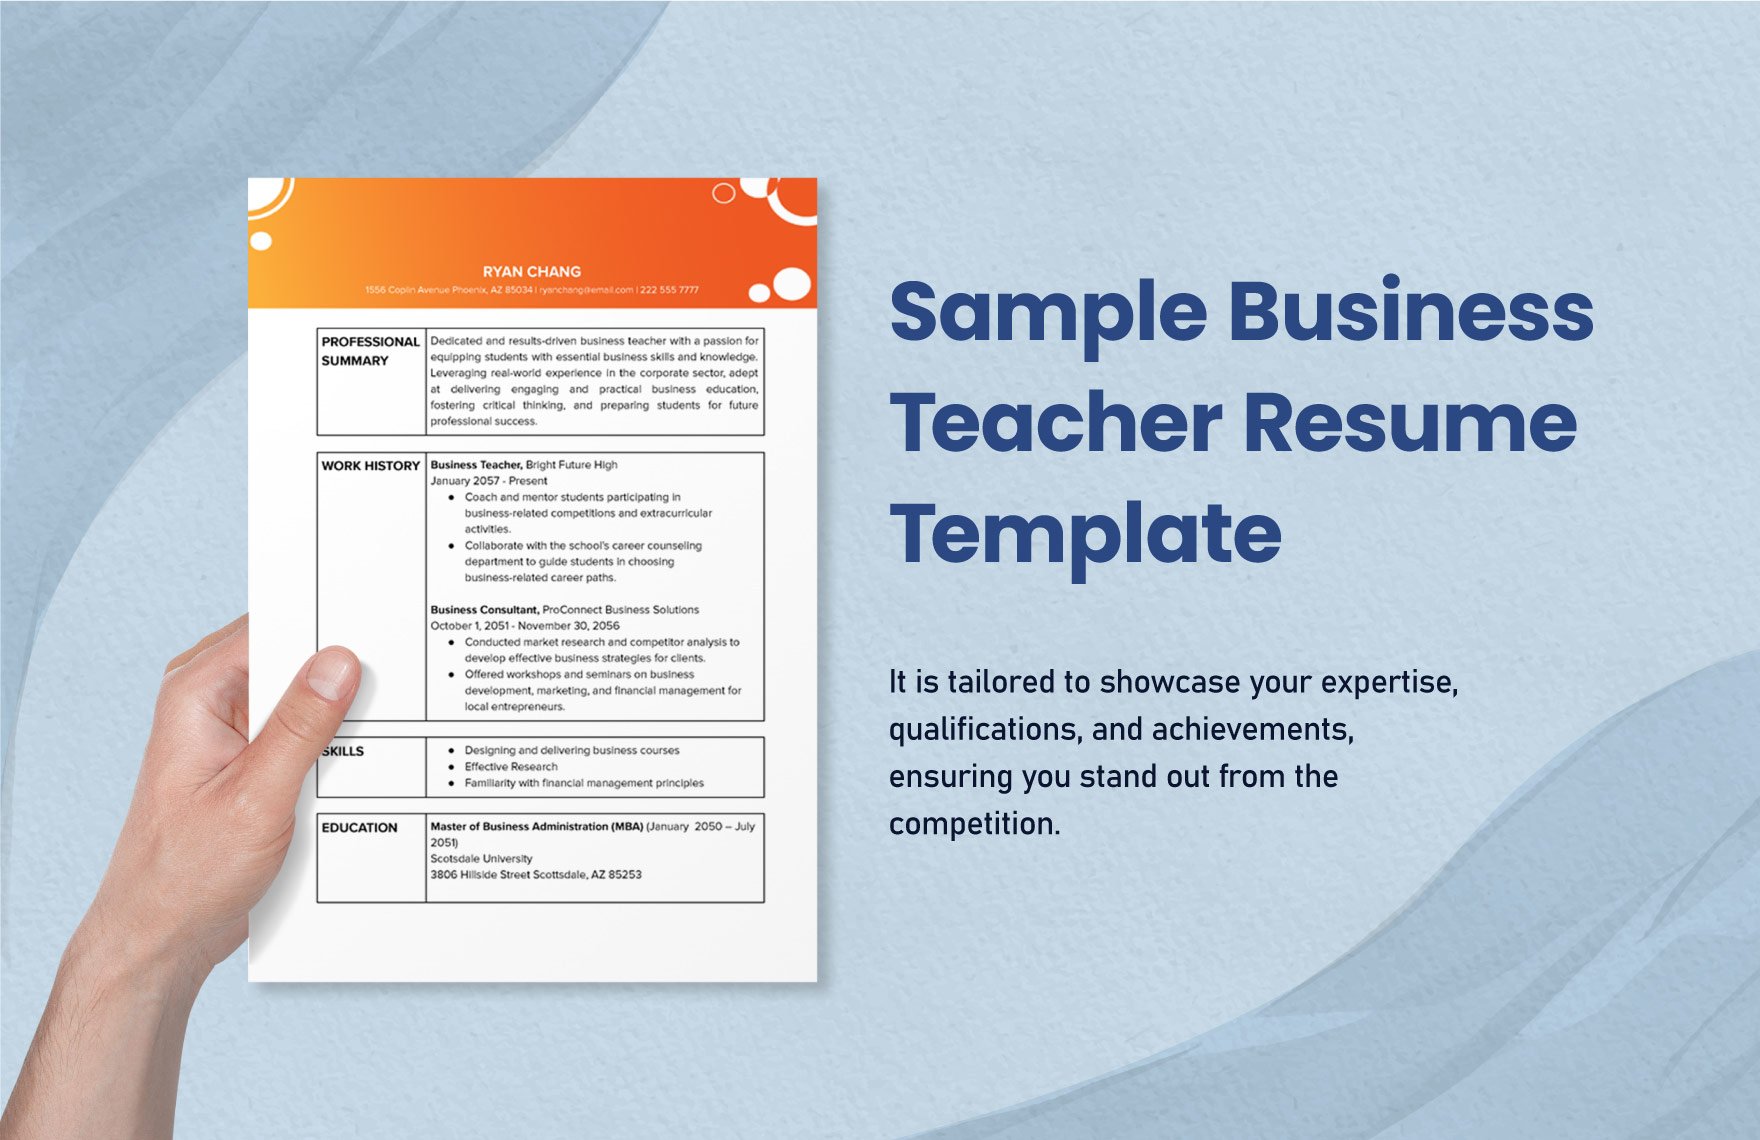 Sample Business Teacher Resume Template